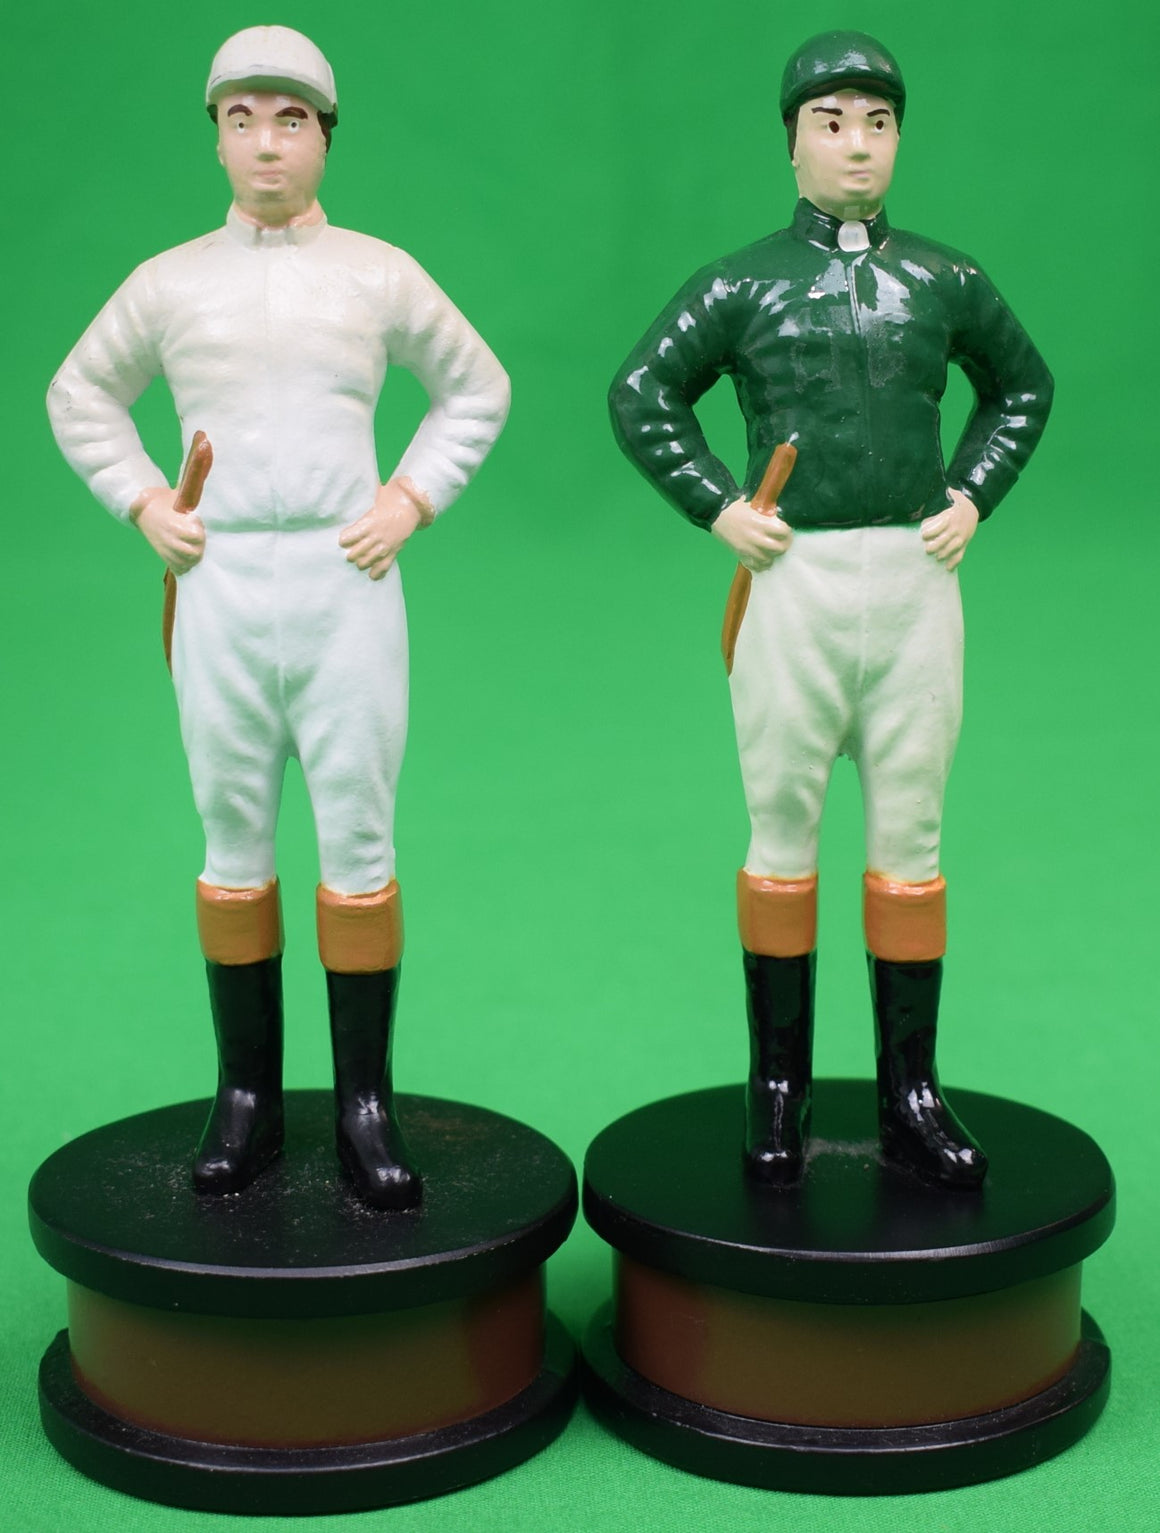 "Pair x Green & White Standing Jockey Bottle Openers"